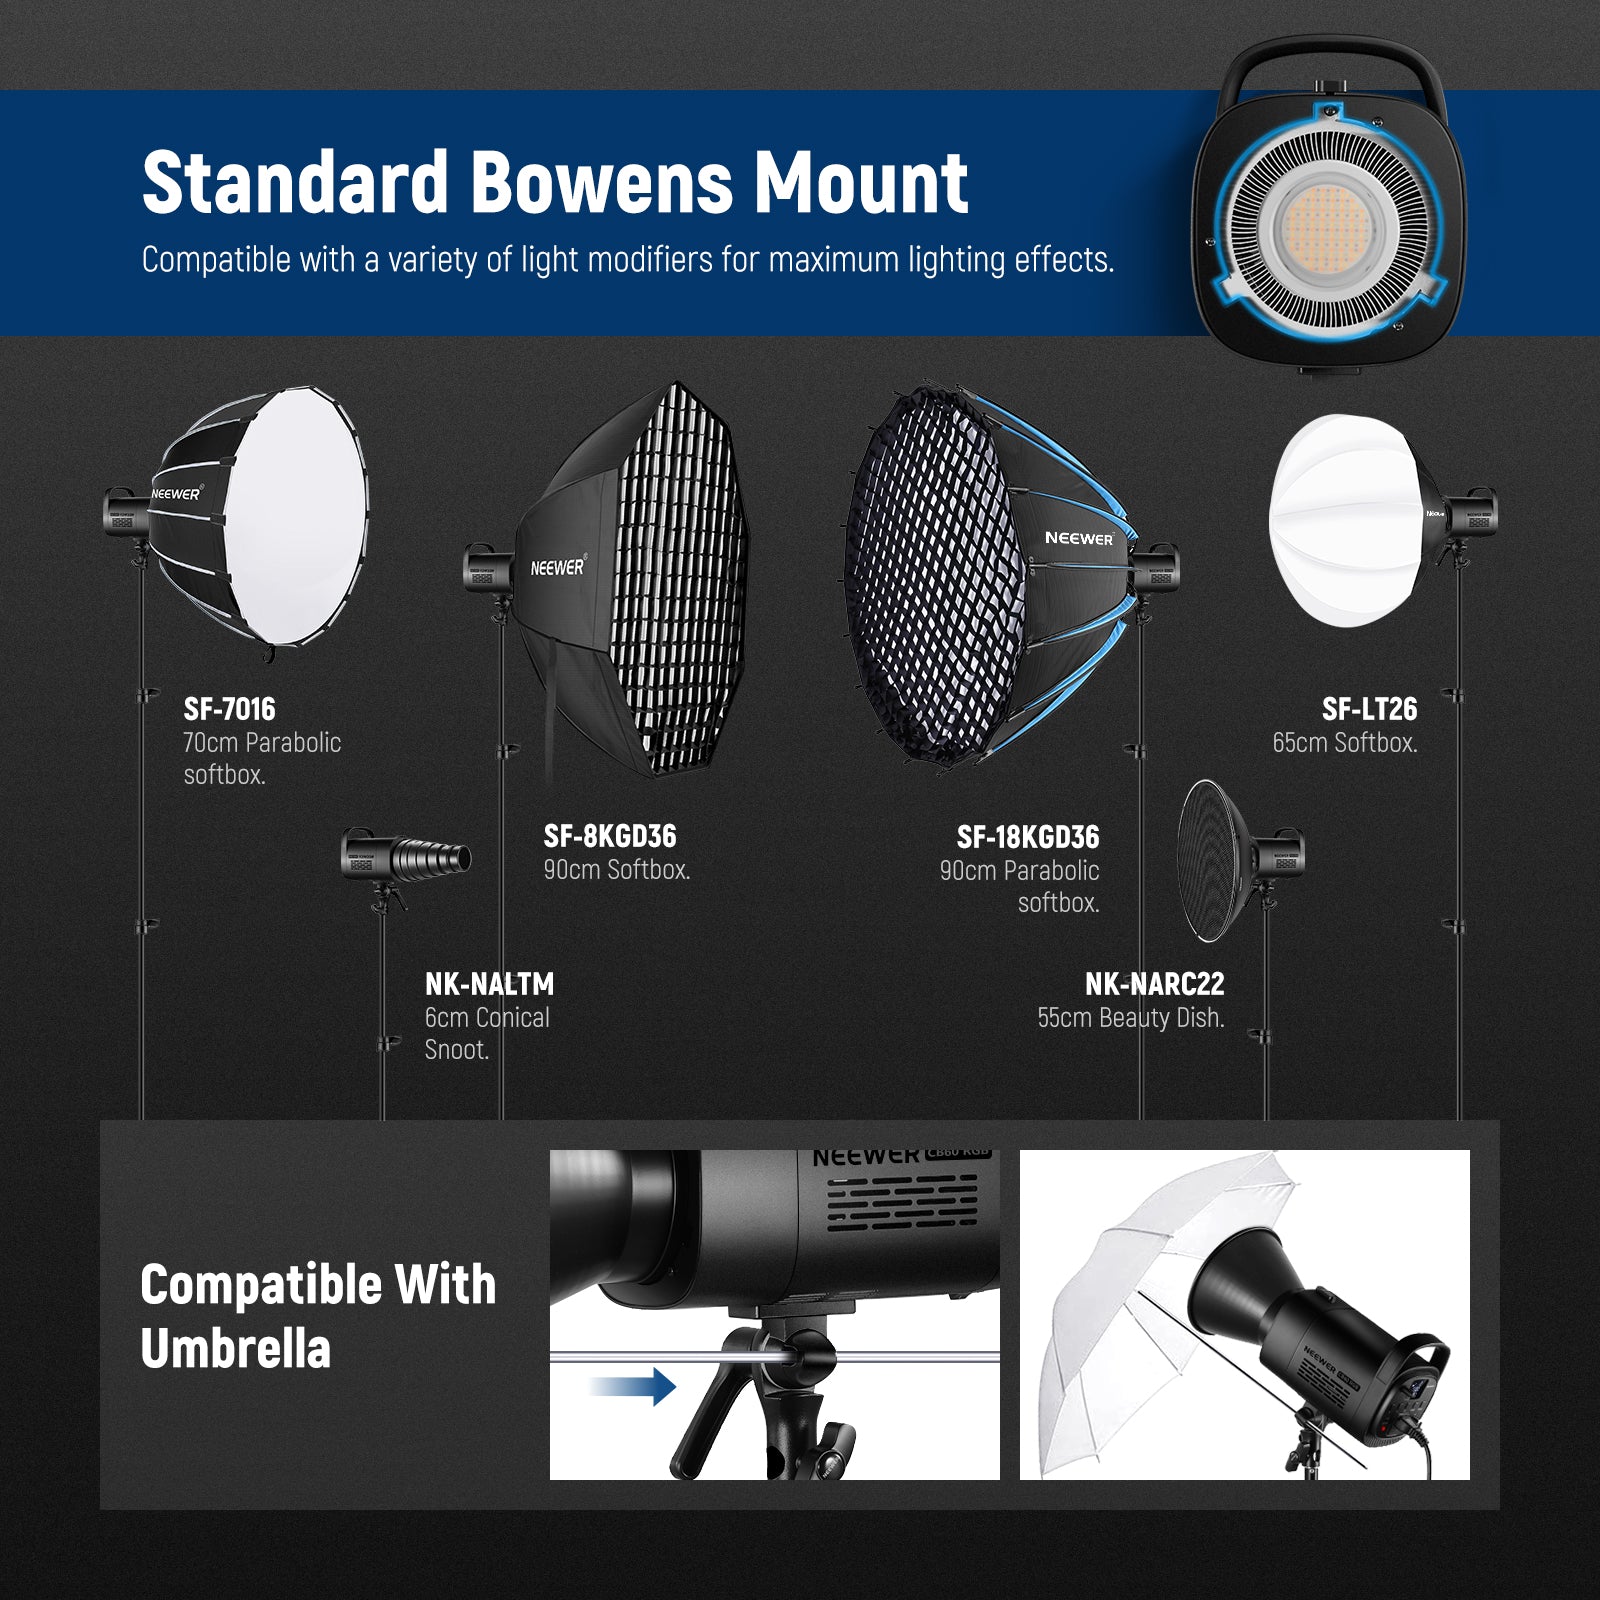 NEEWER RGB CB60 Bowens Mount CRI 97+ LED Video Light - NEEWER 